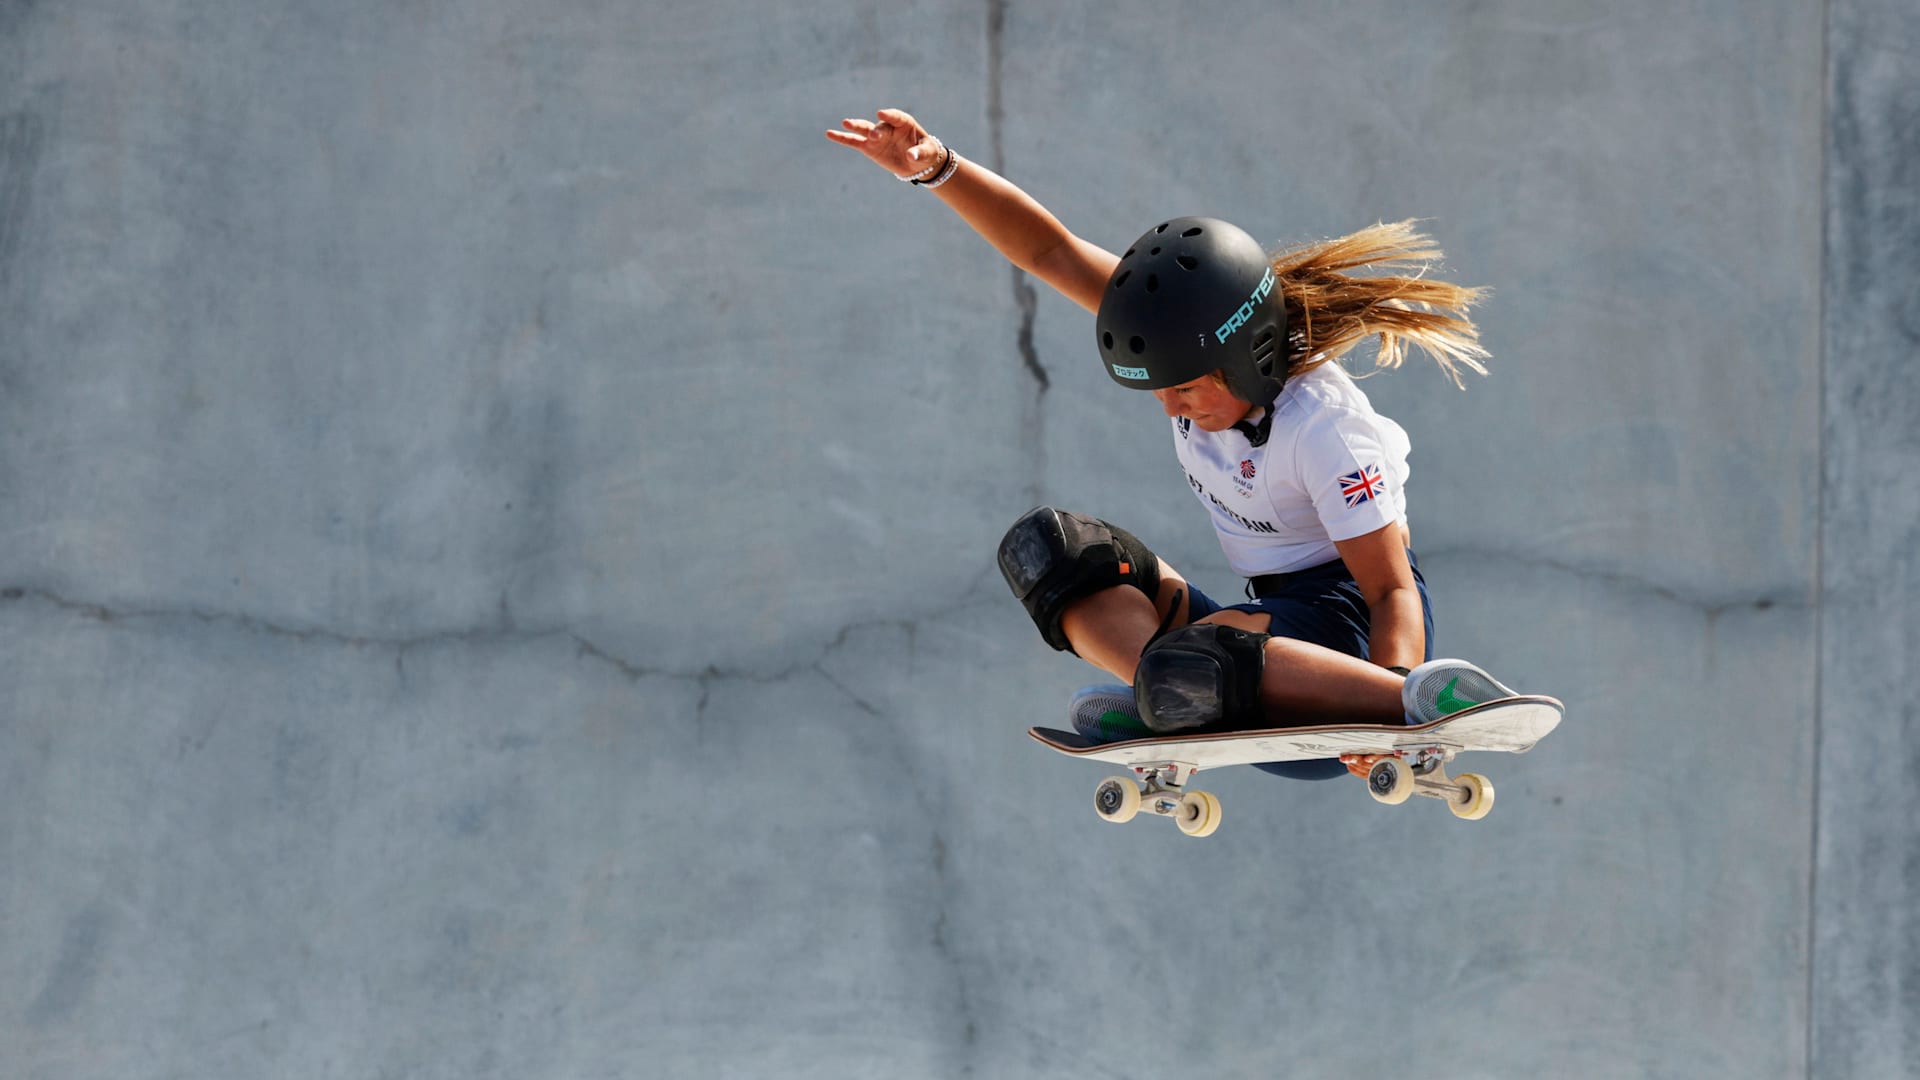 Skateboarding phenom Sky Brown destined for history at Tokyo 2020